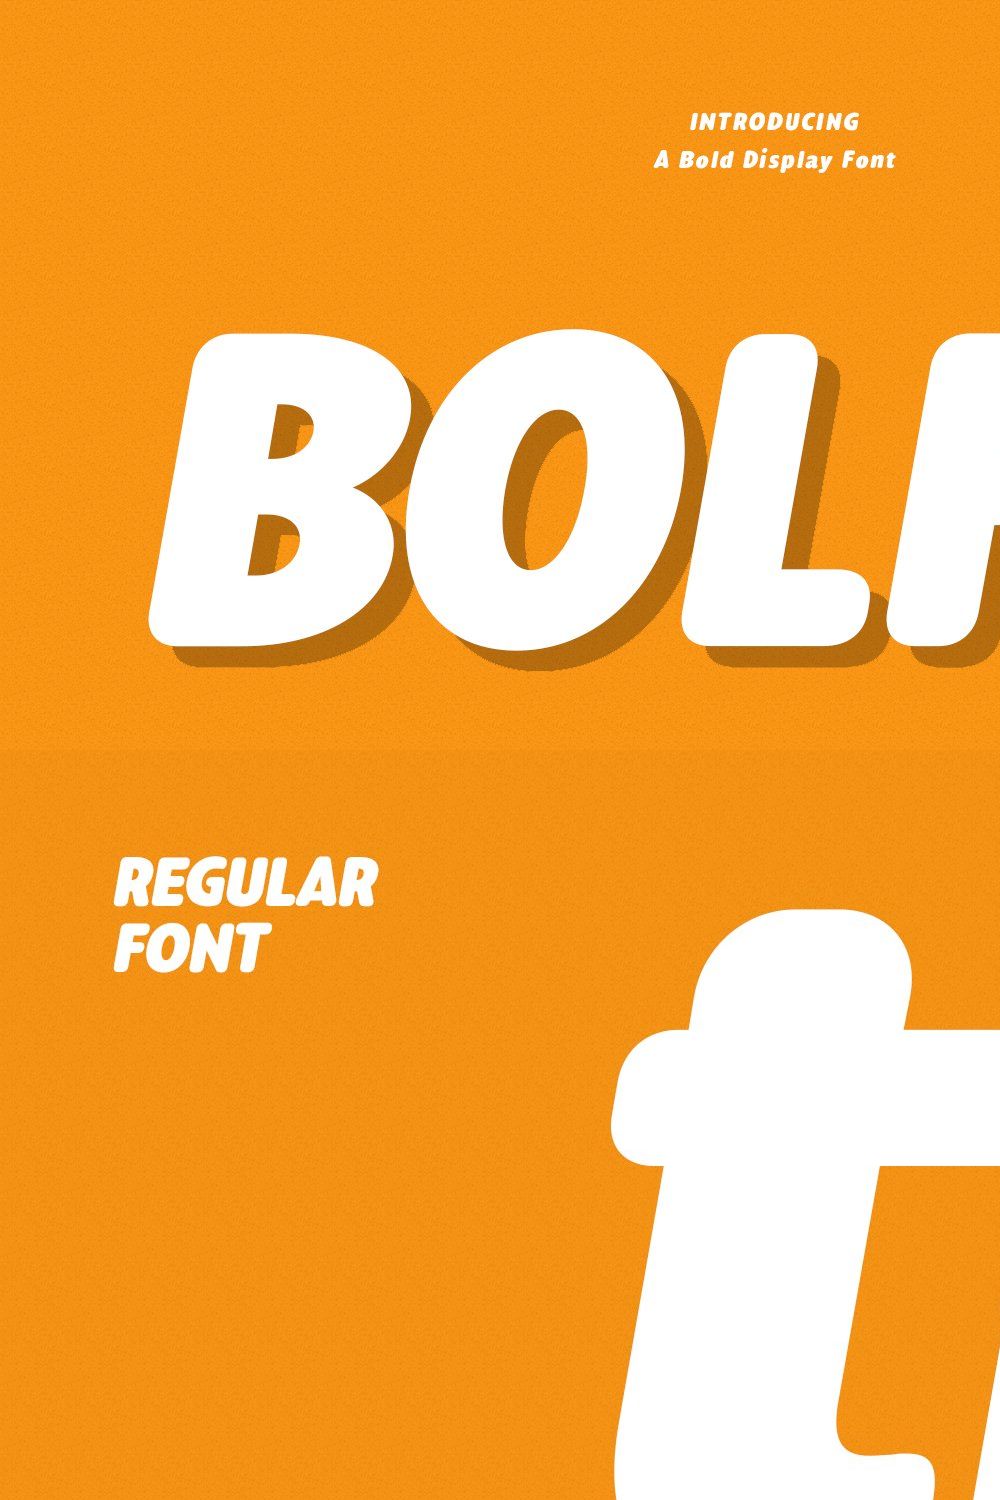 Bolfy Handwritten Display Font pinterest preview image.